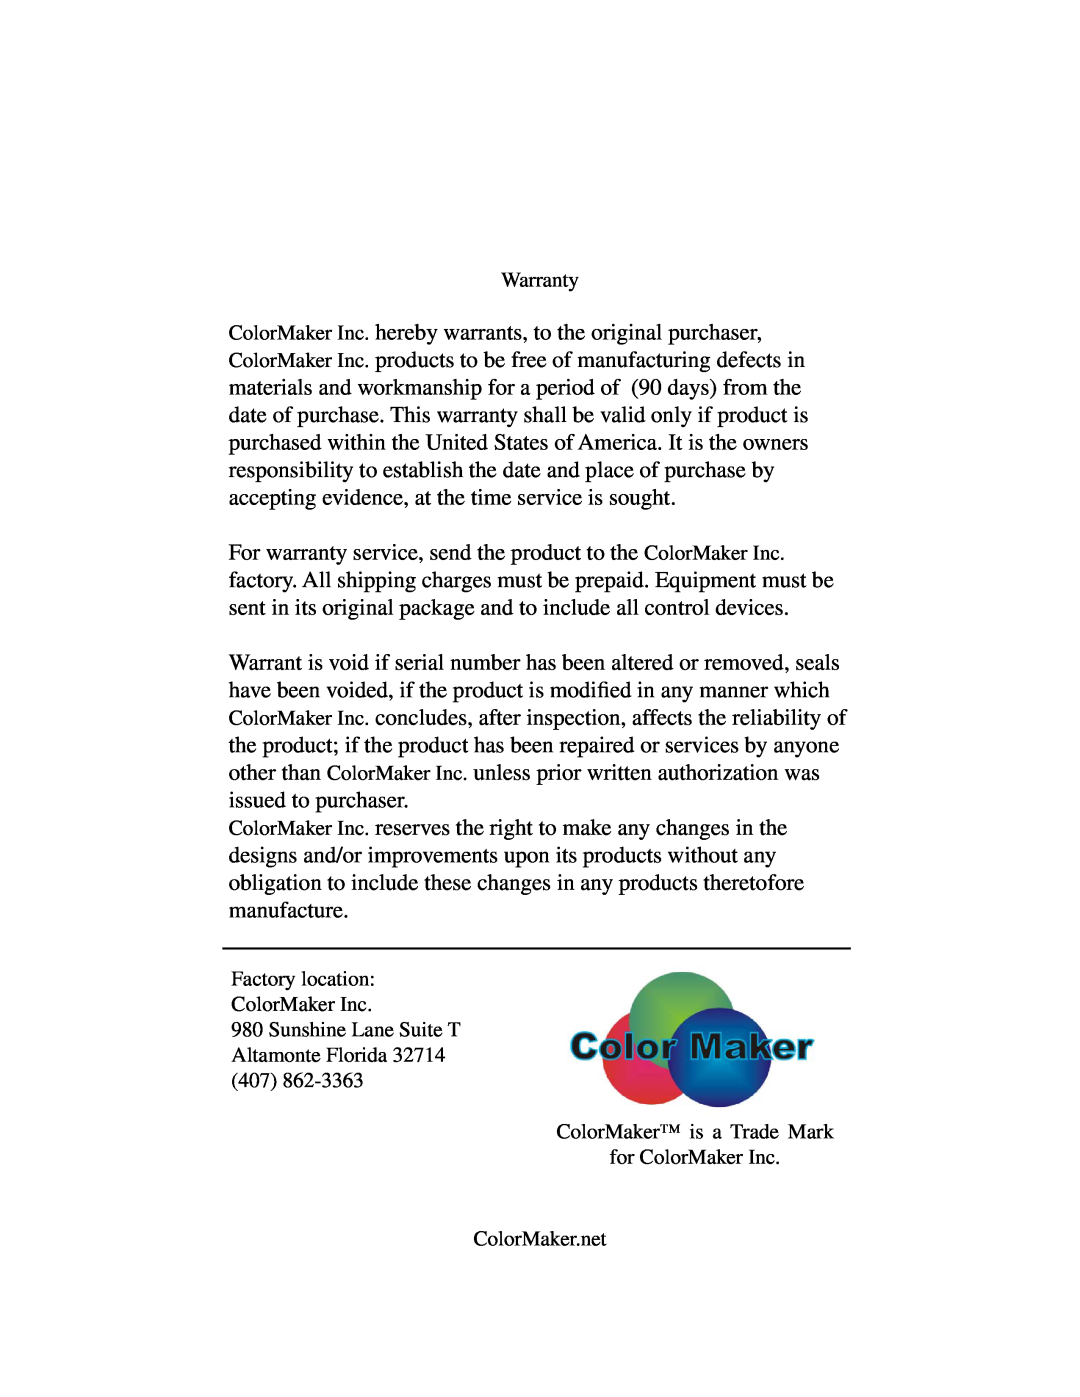 CyClone 360 Warranty, Factory location ColorMaker Inc, ColorMaker is a Trade Mark for ColorMaker Inc, ColorMaker.net 